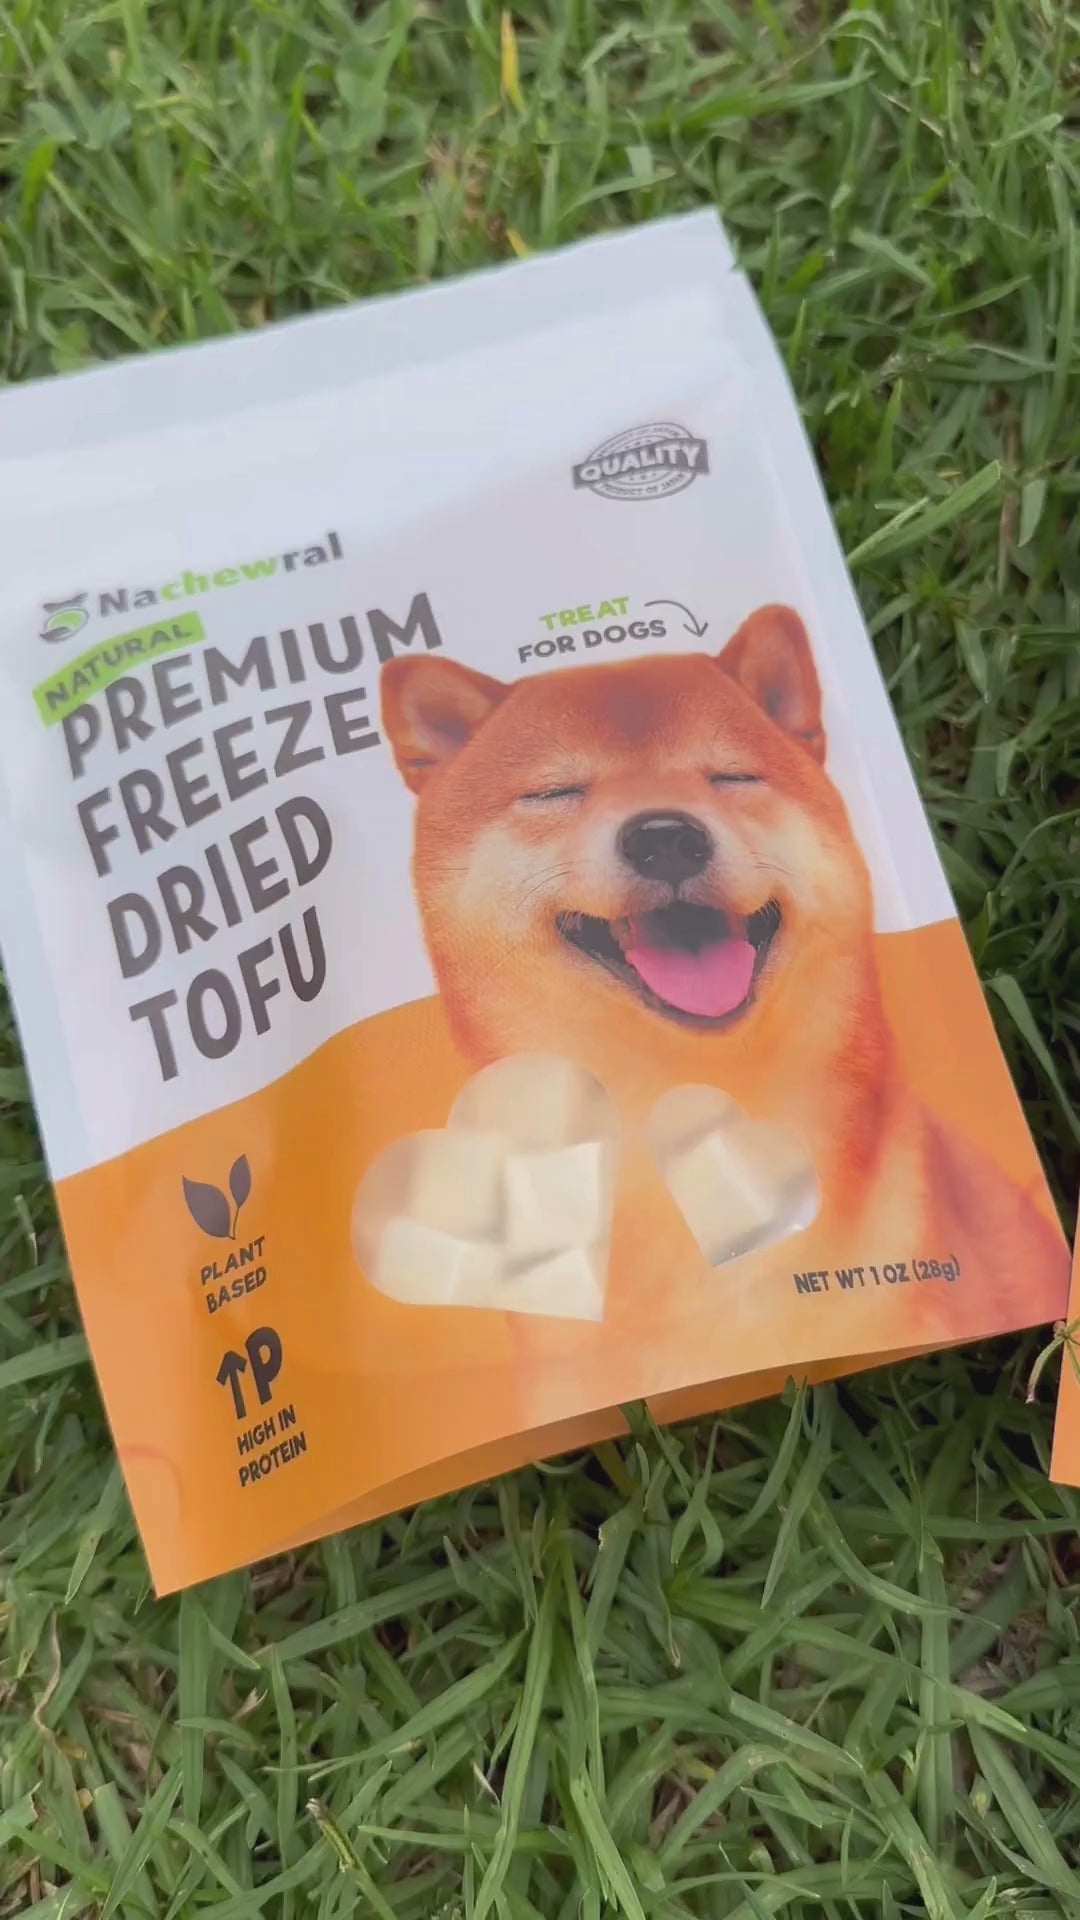 Load video: Nachewral Premium Freeze Dried Tofu Treat. Dogs love it!